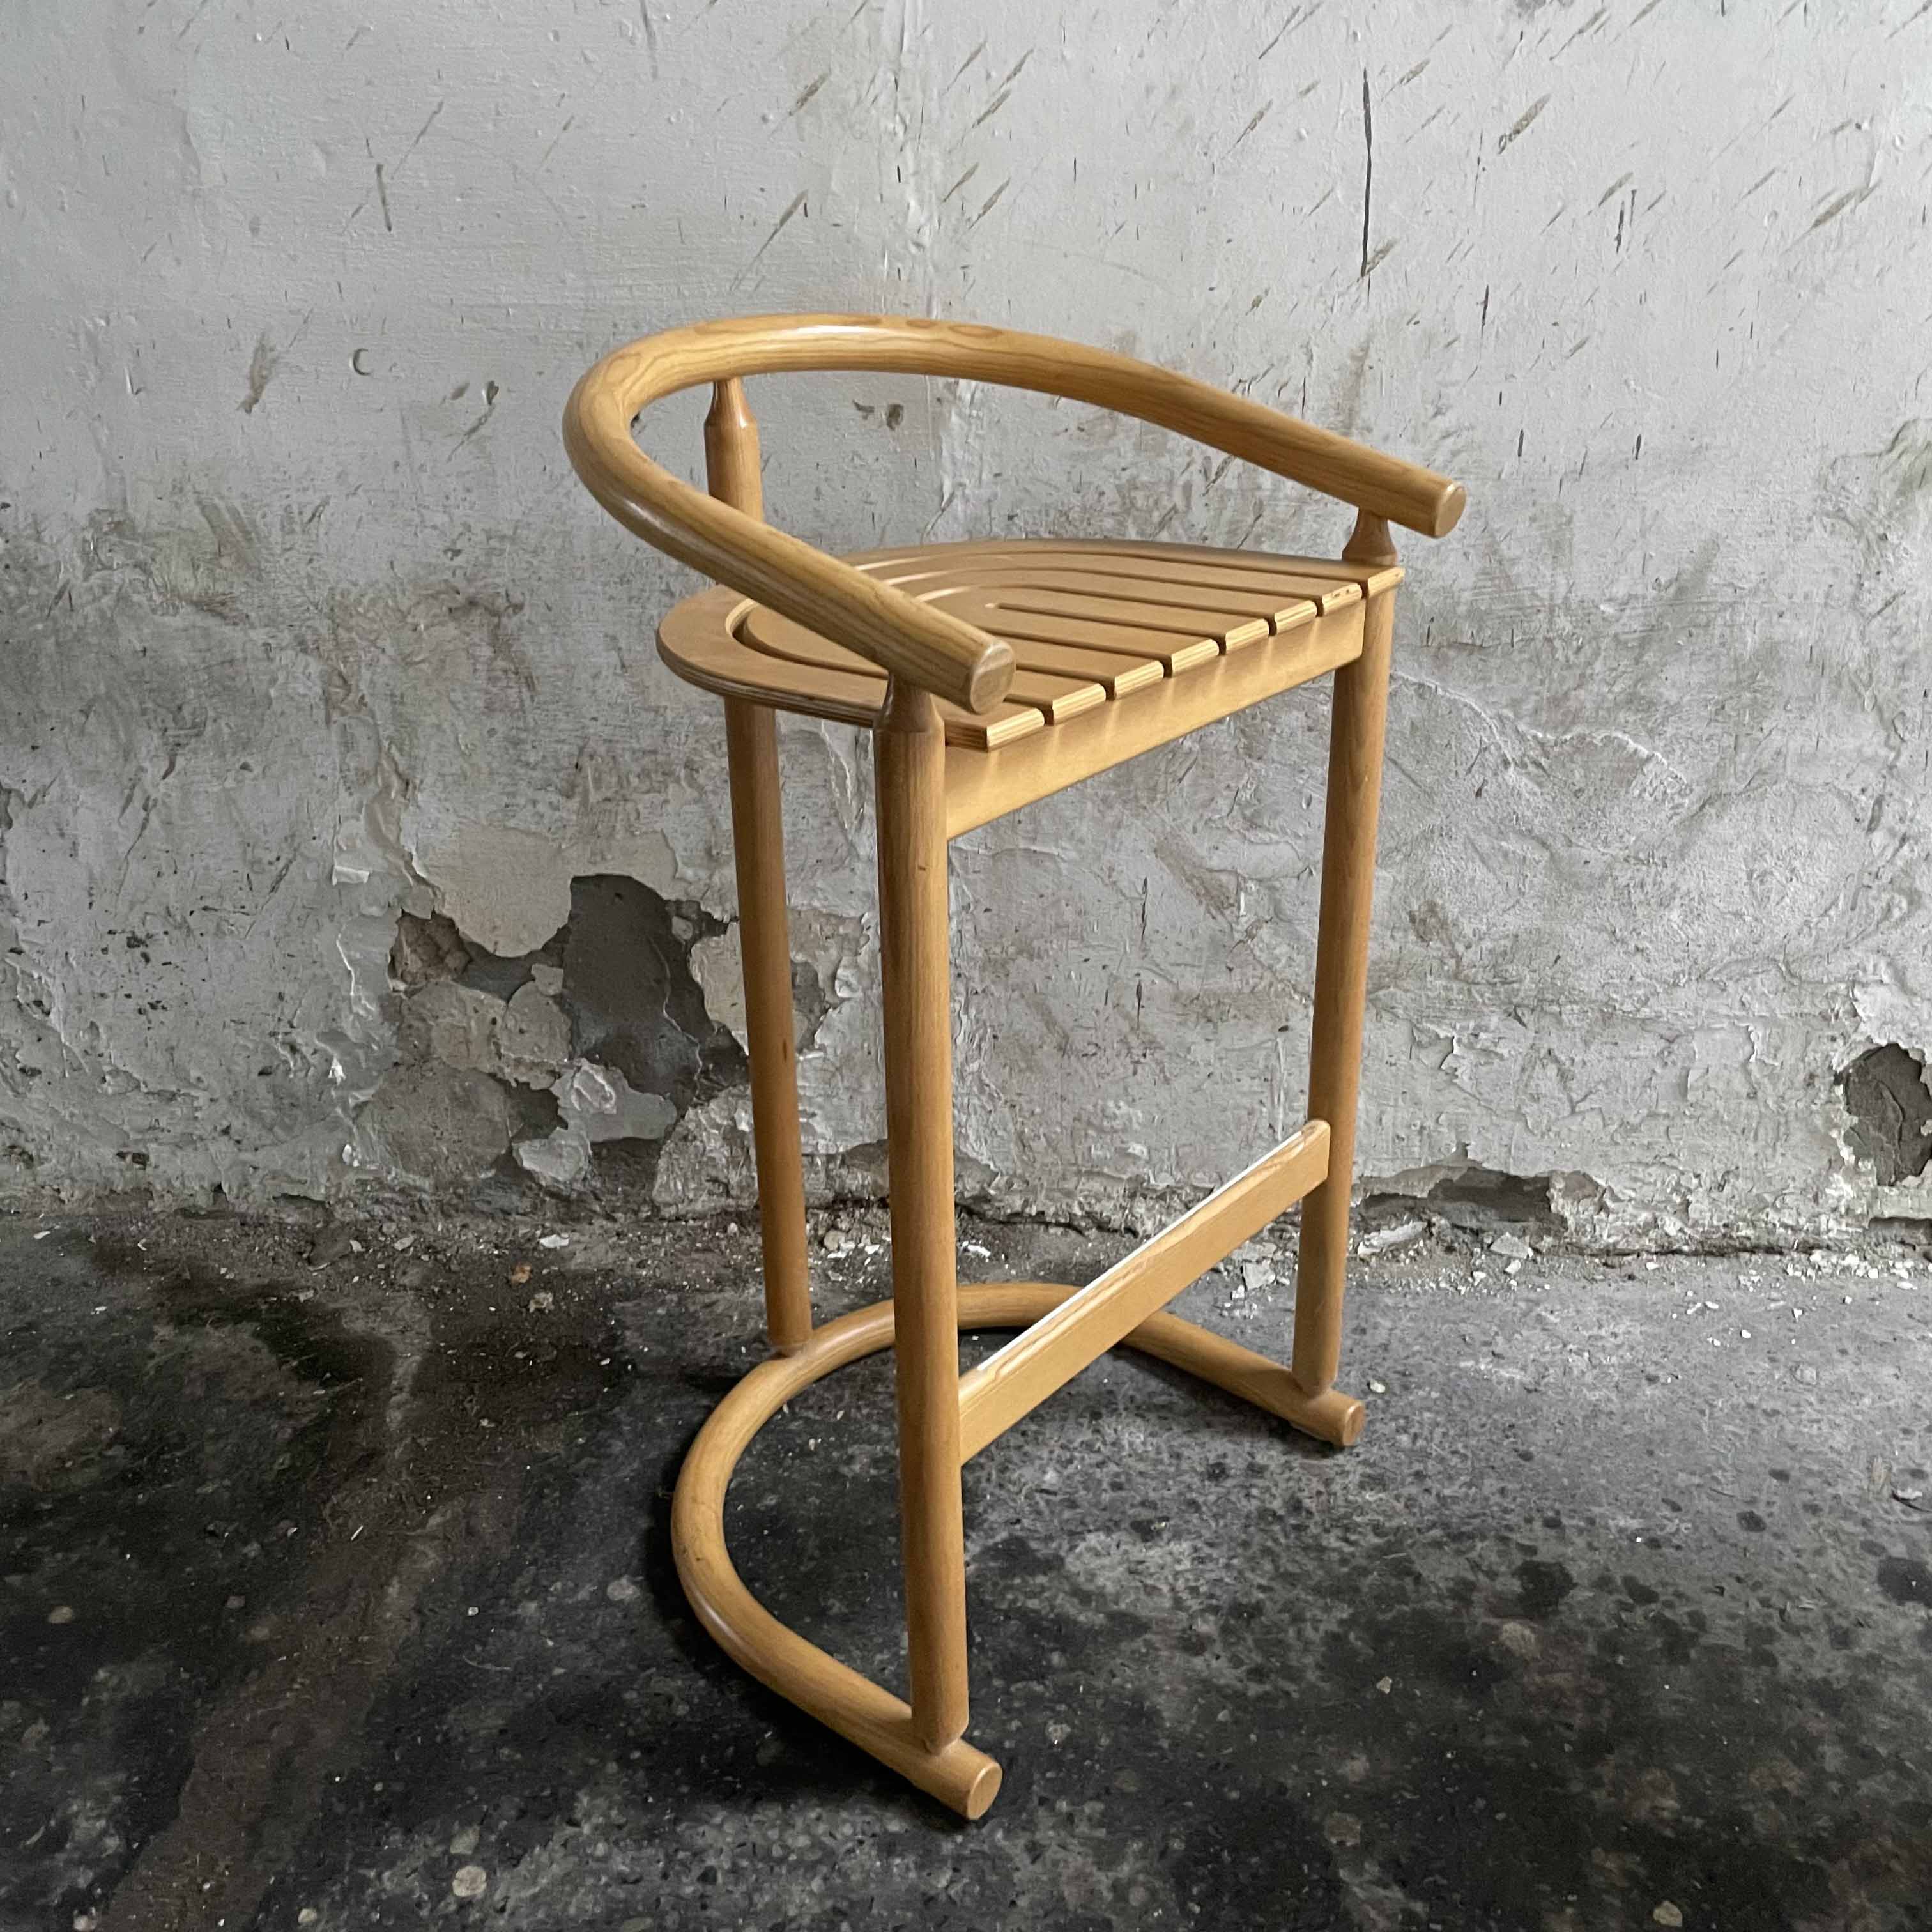 Bentwood Chairs by Allmilmö, Germany, 1980, mid century bar stools vintage warszawa krzeslarz single chair